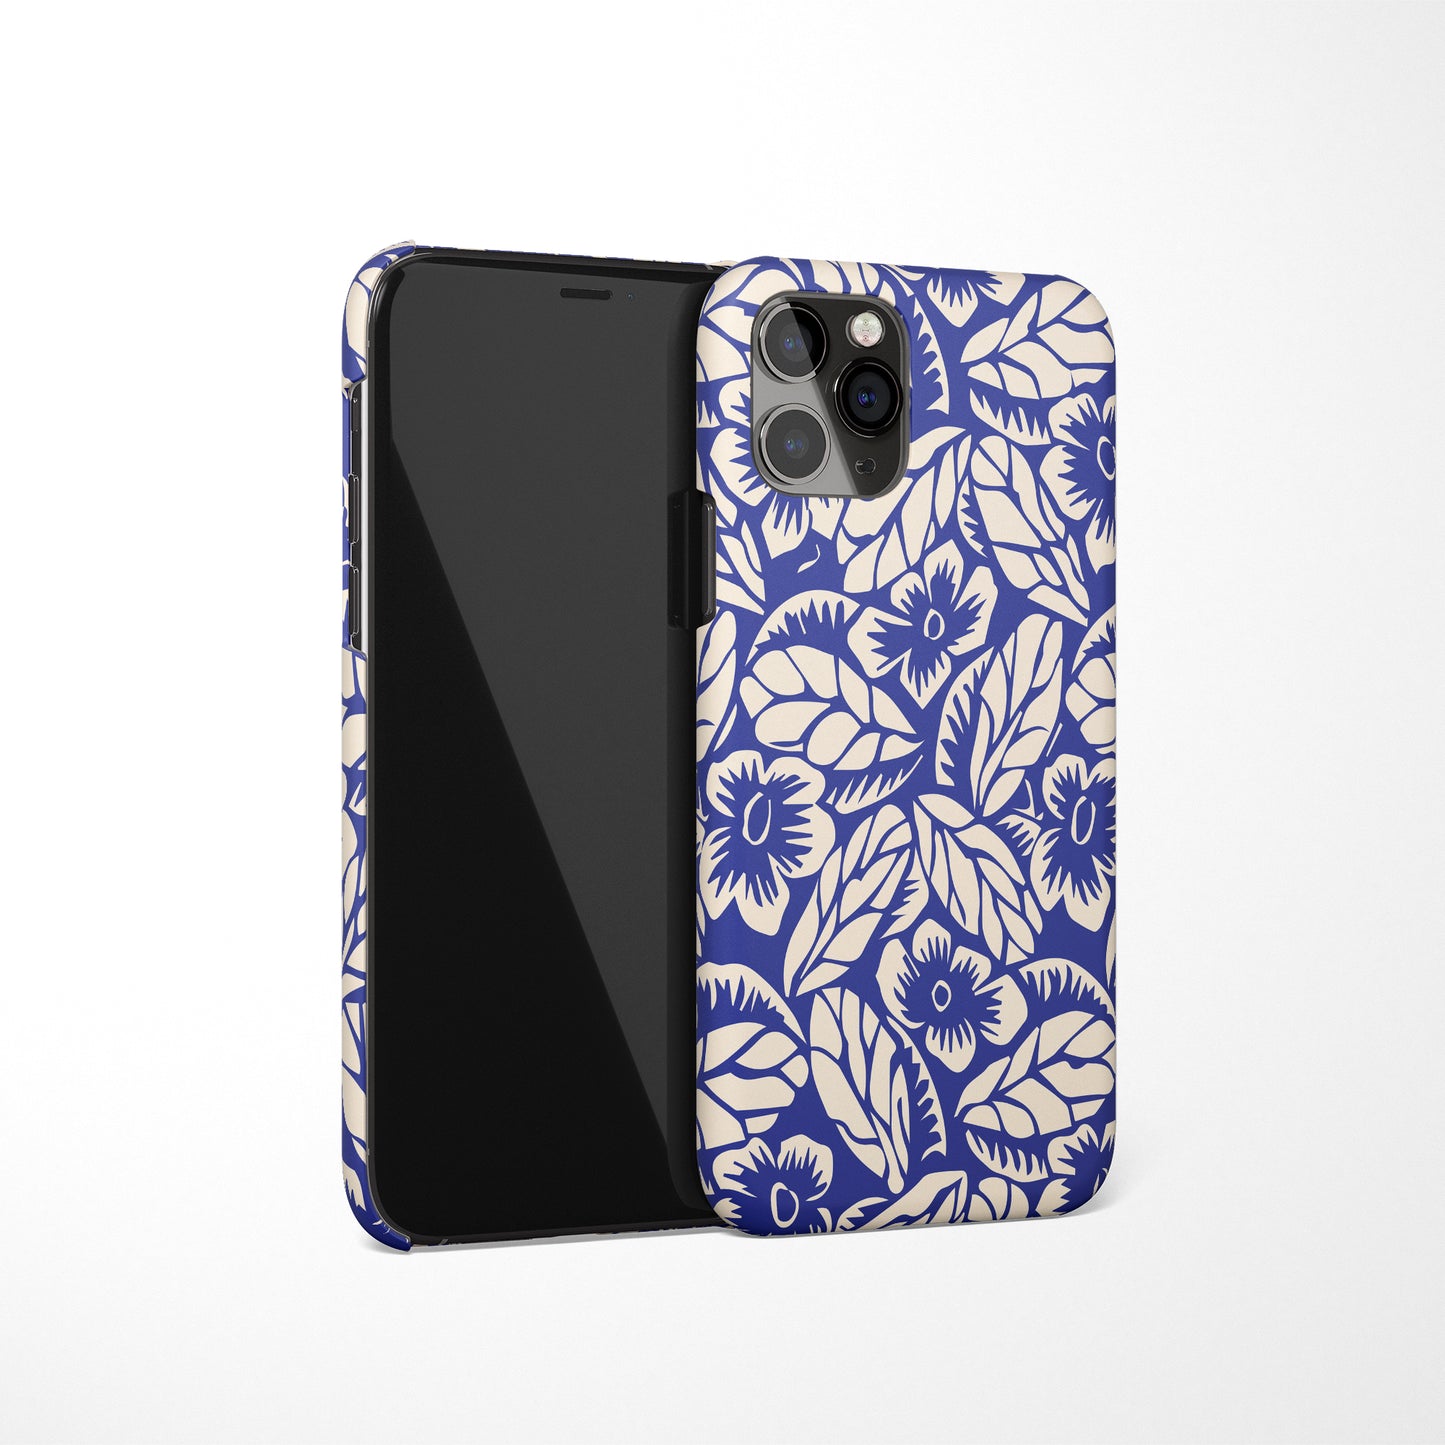 Artistic Floral iPhone Case